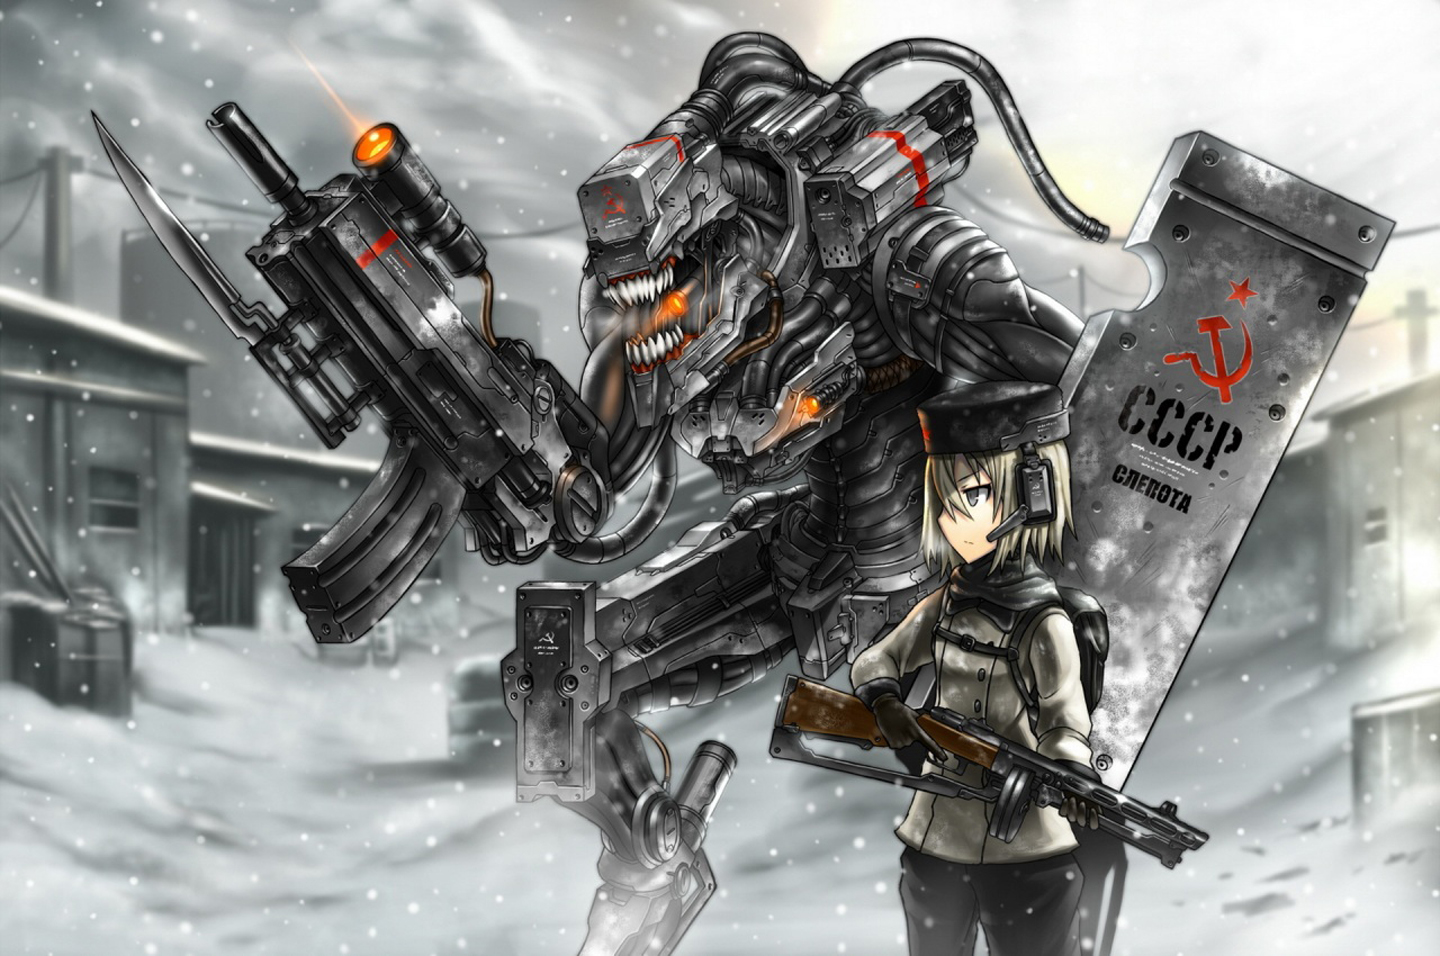 mecha+riffle+bayonet+snow+hd+wallpaper+%